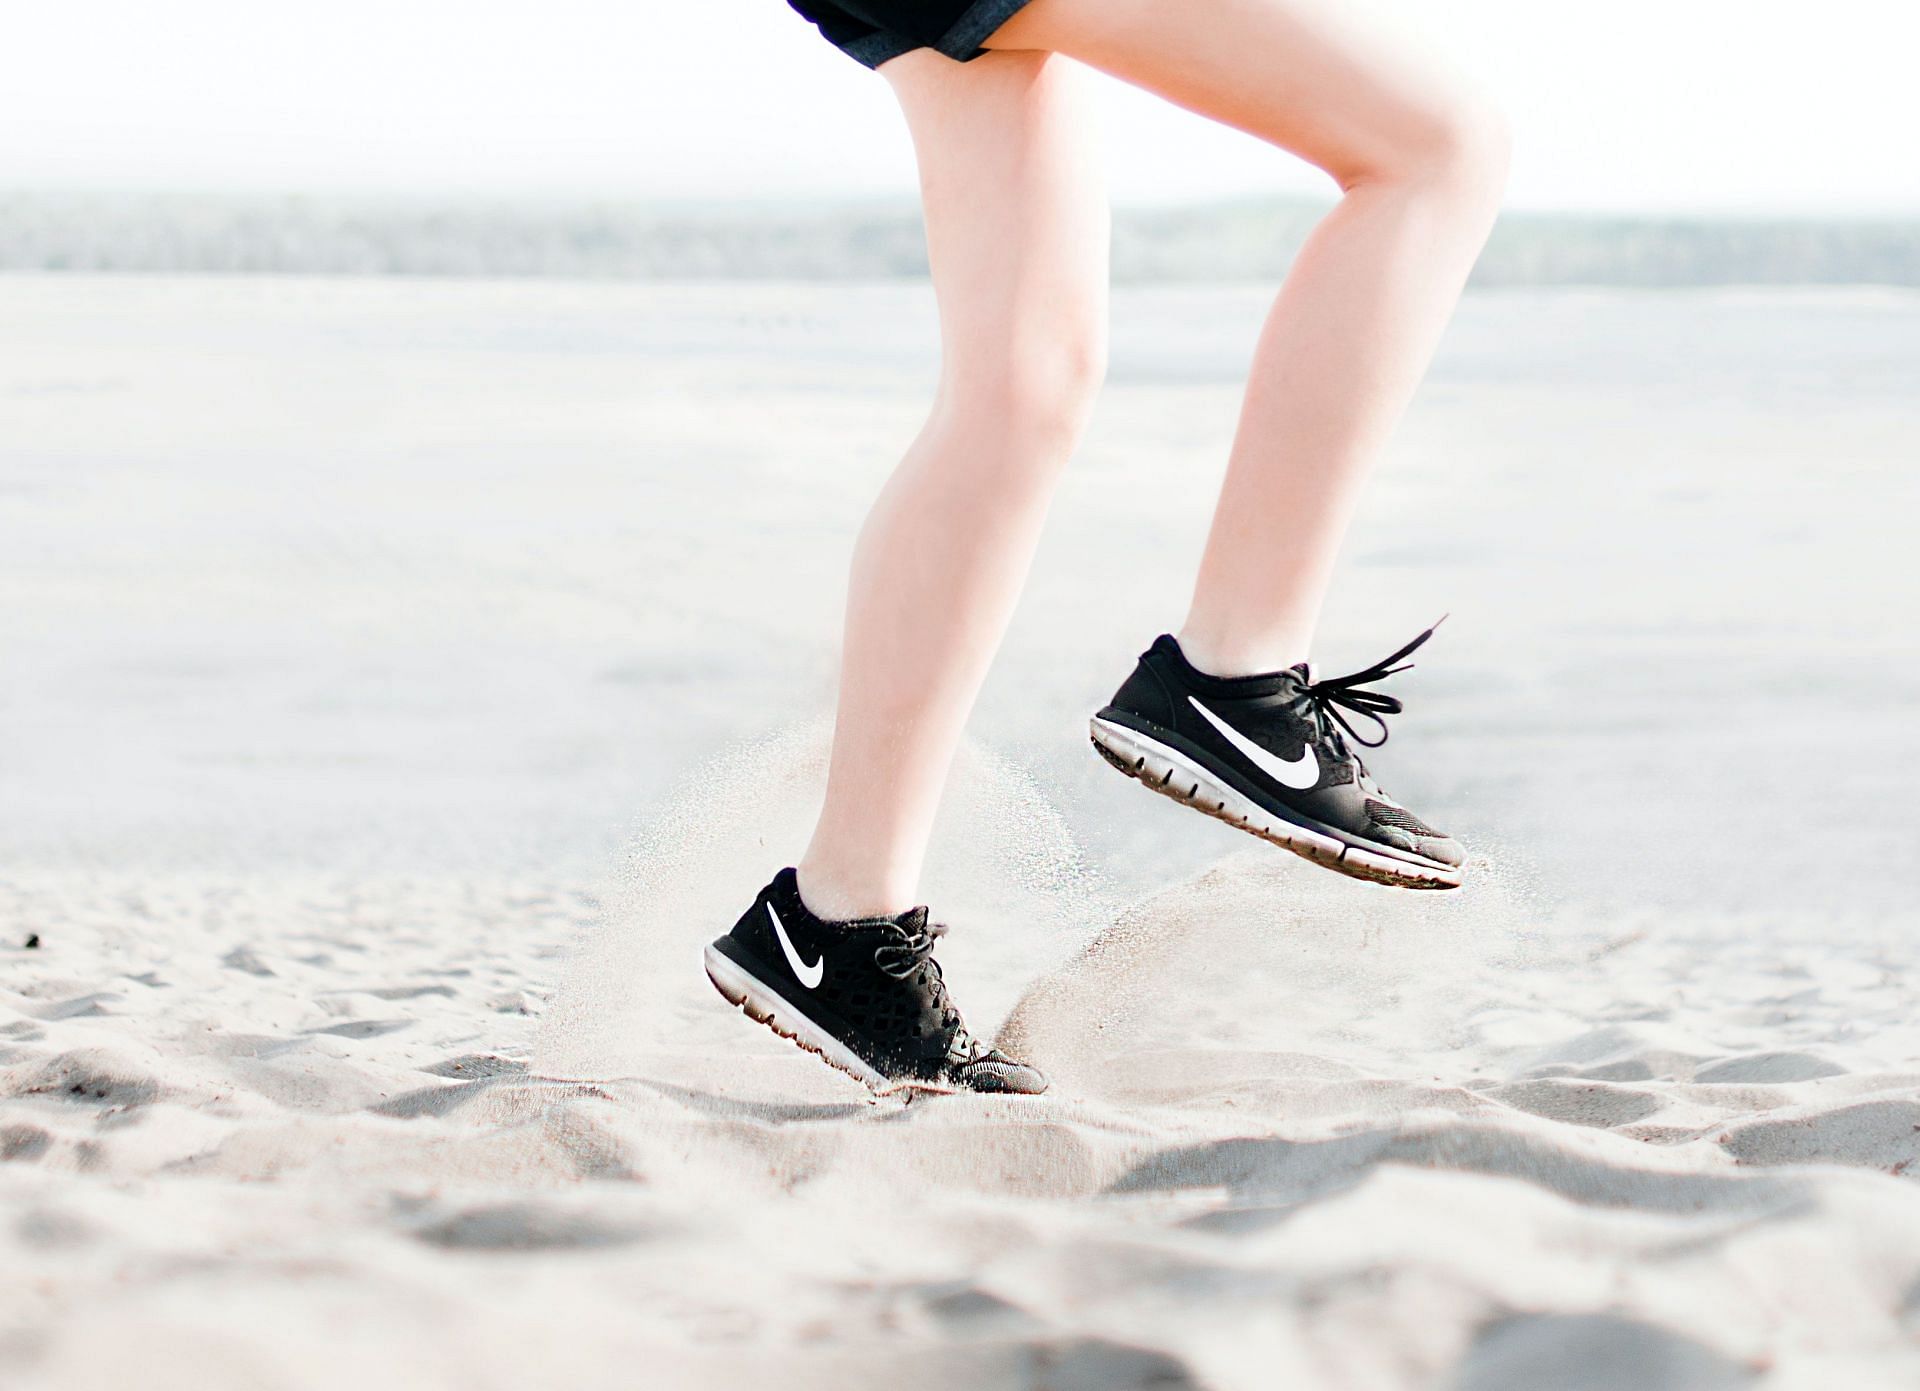 Running improves bone, lower back and knee strength. (Image via Pexels/Dominika Roseclay)